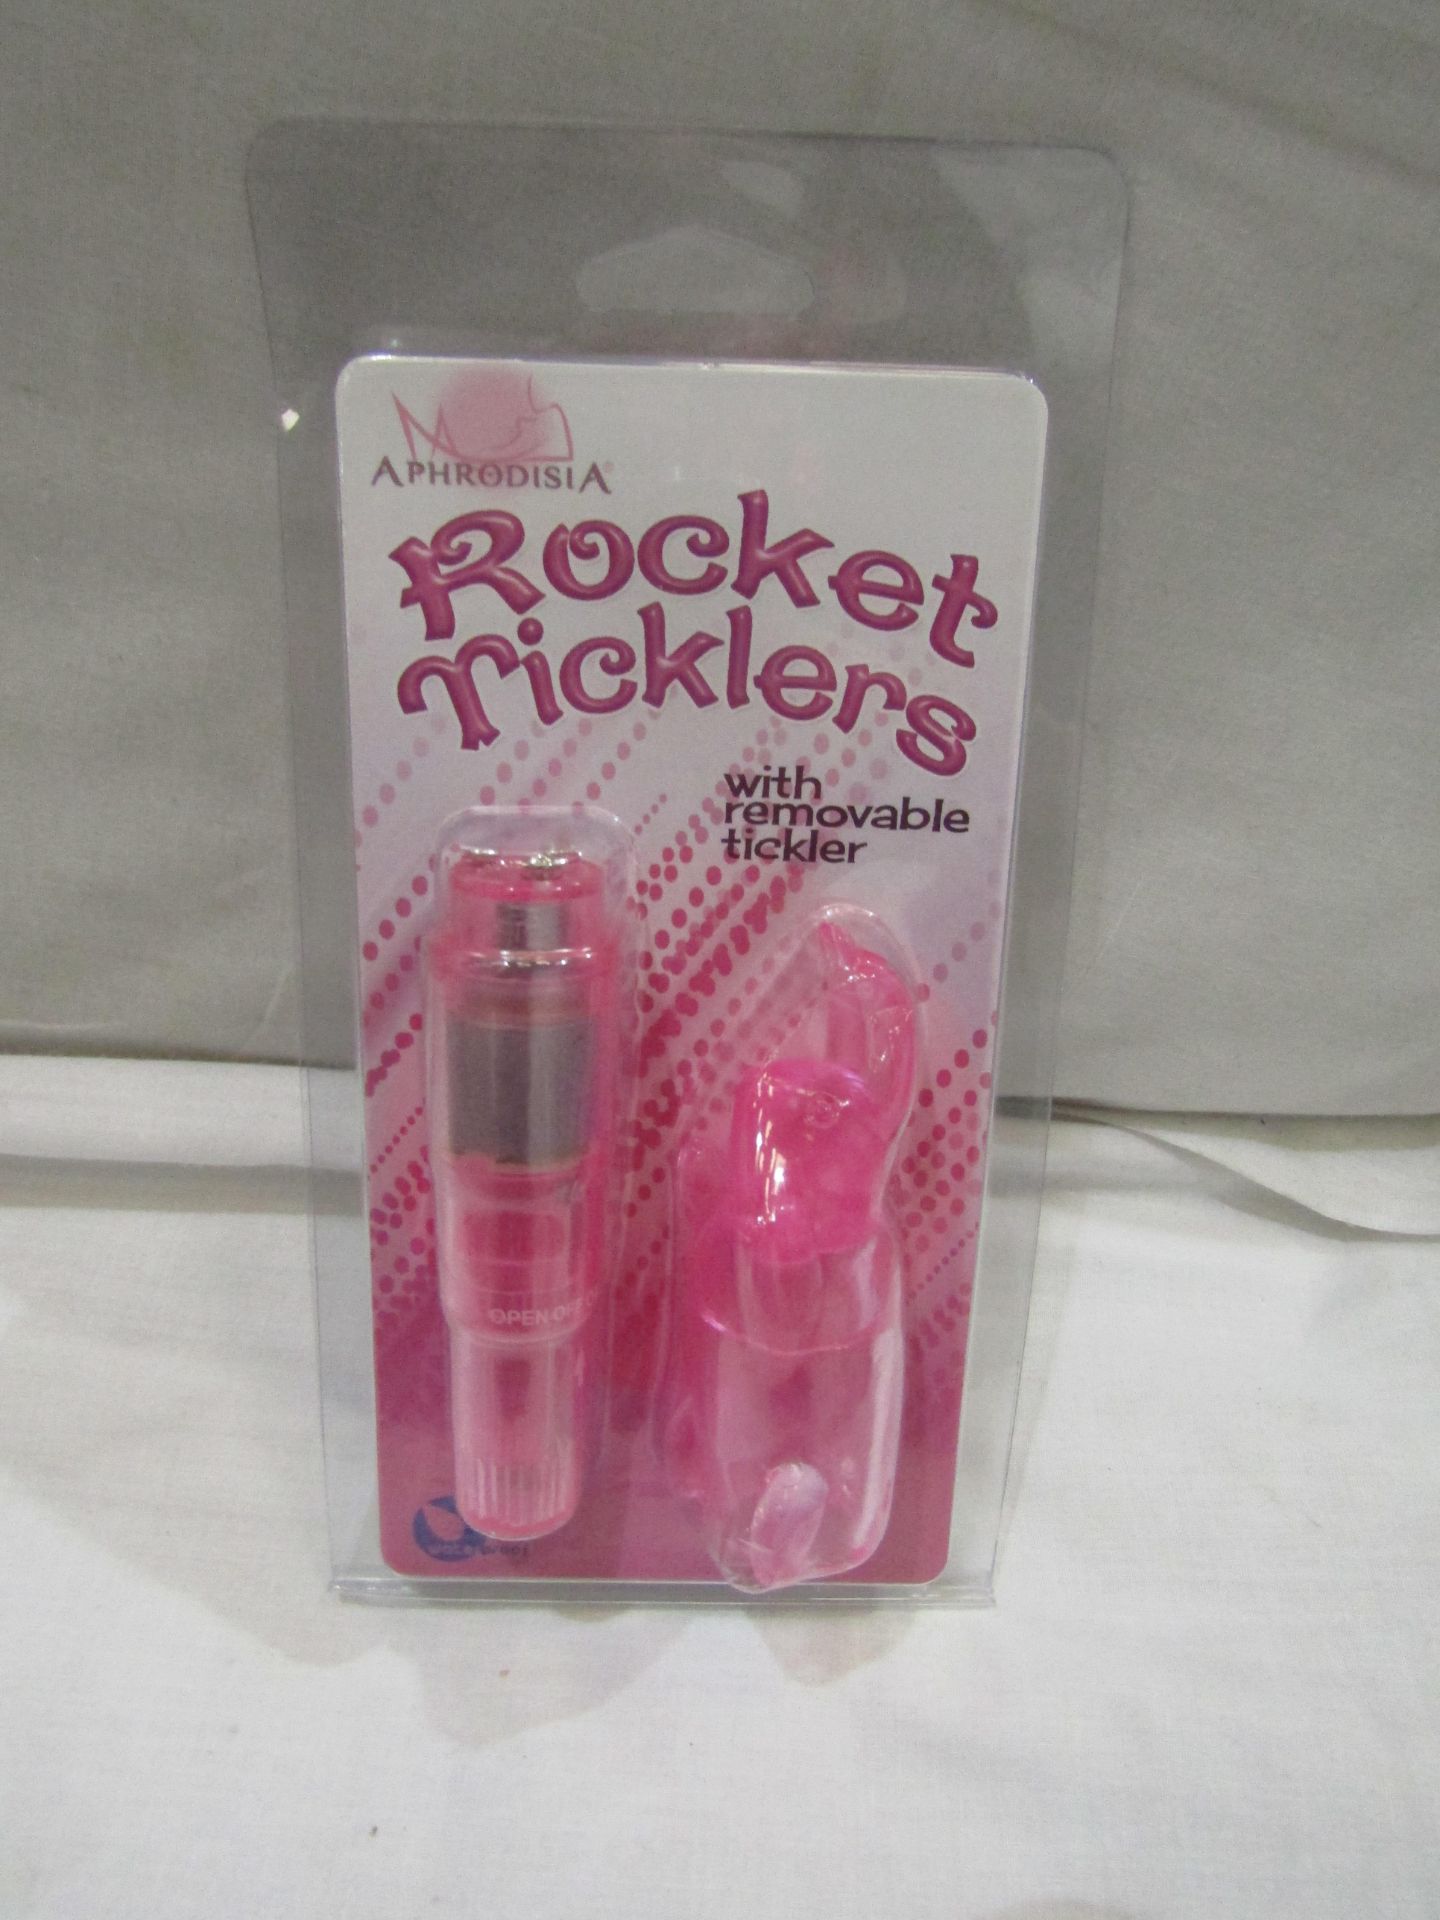 Aphrodisia - Rocket Ricklers Vibration Tickler ( Rabbit Design - Colour Varys ) - New.